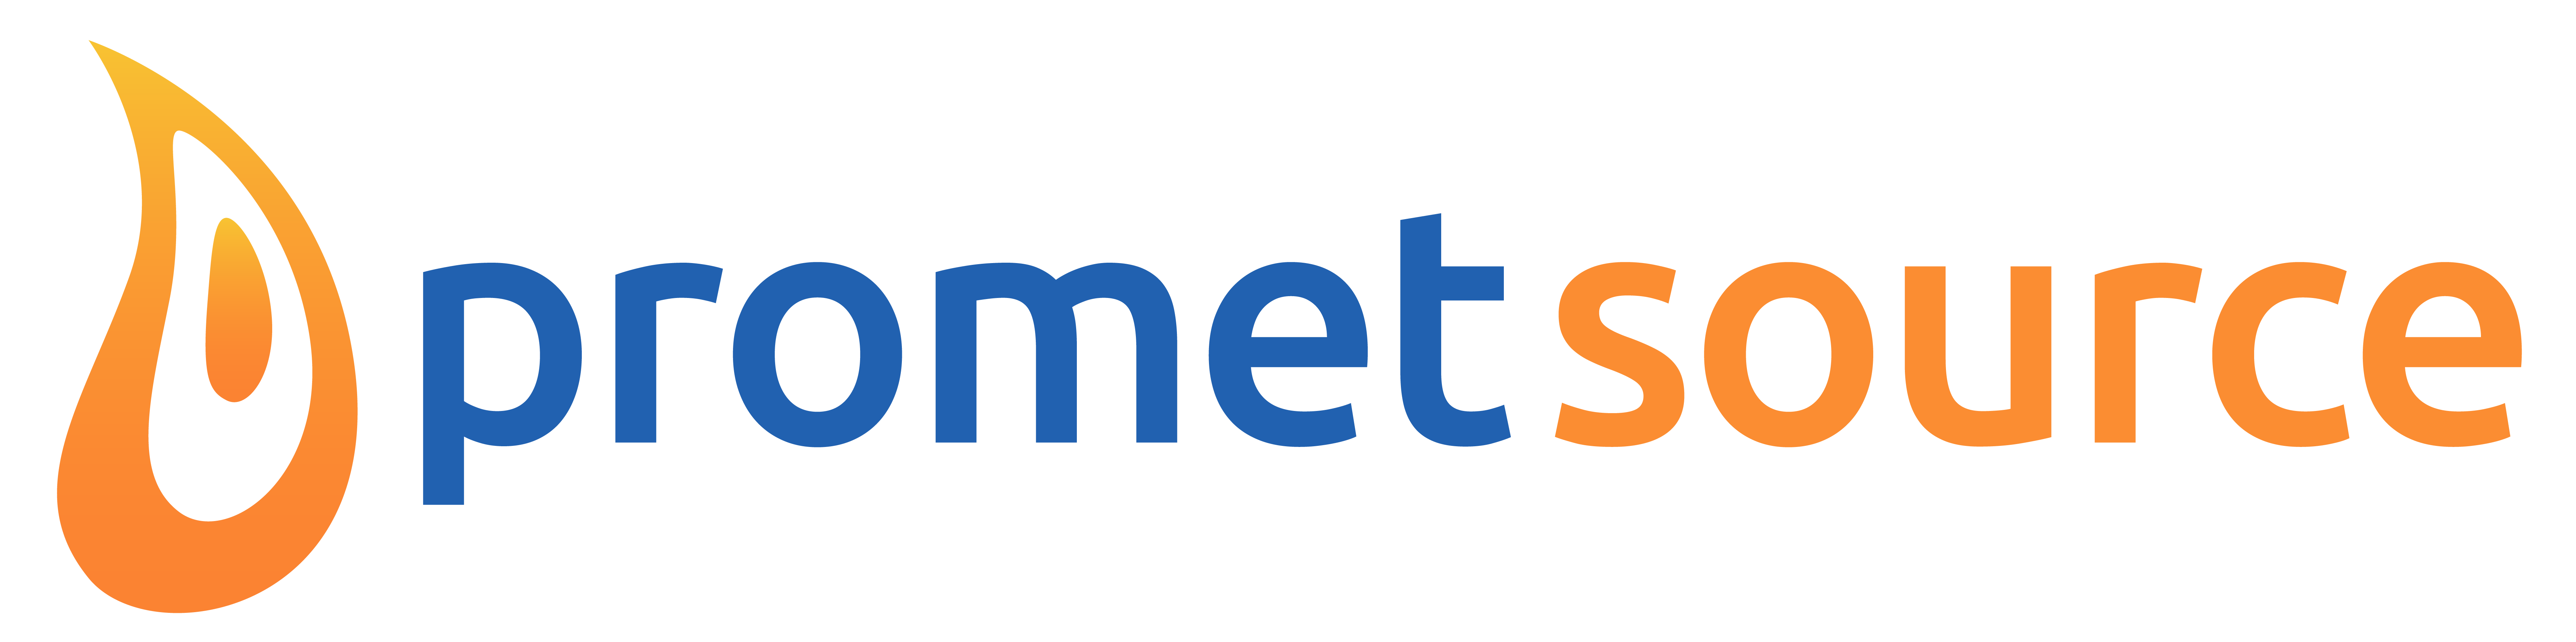 Promet Source logo